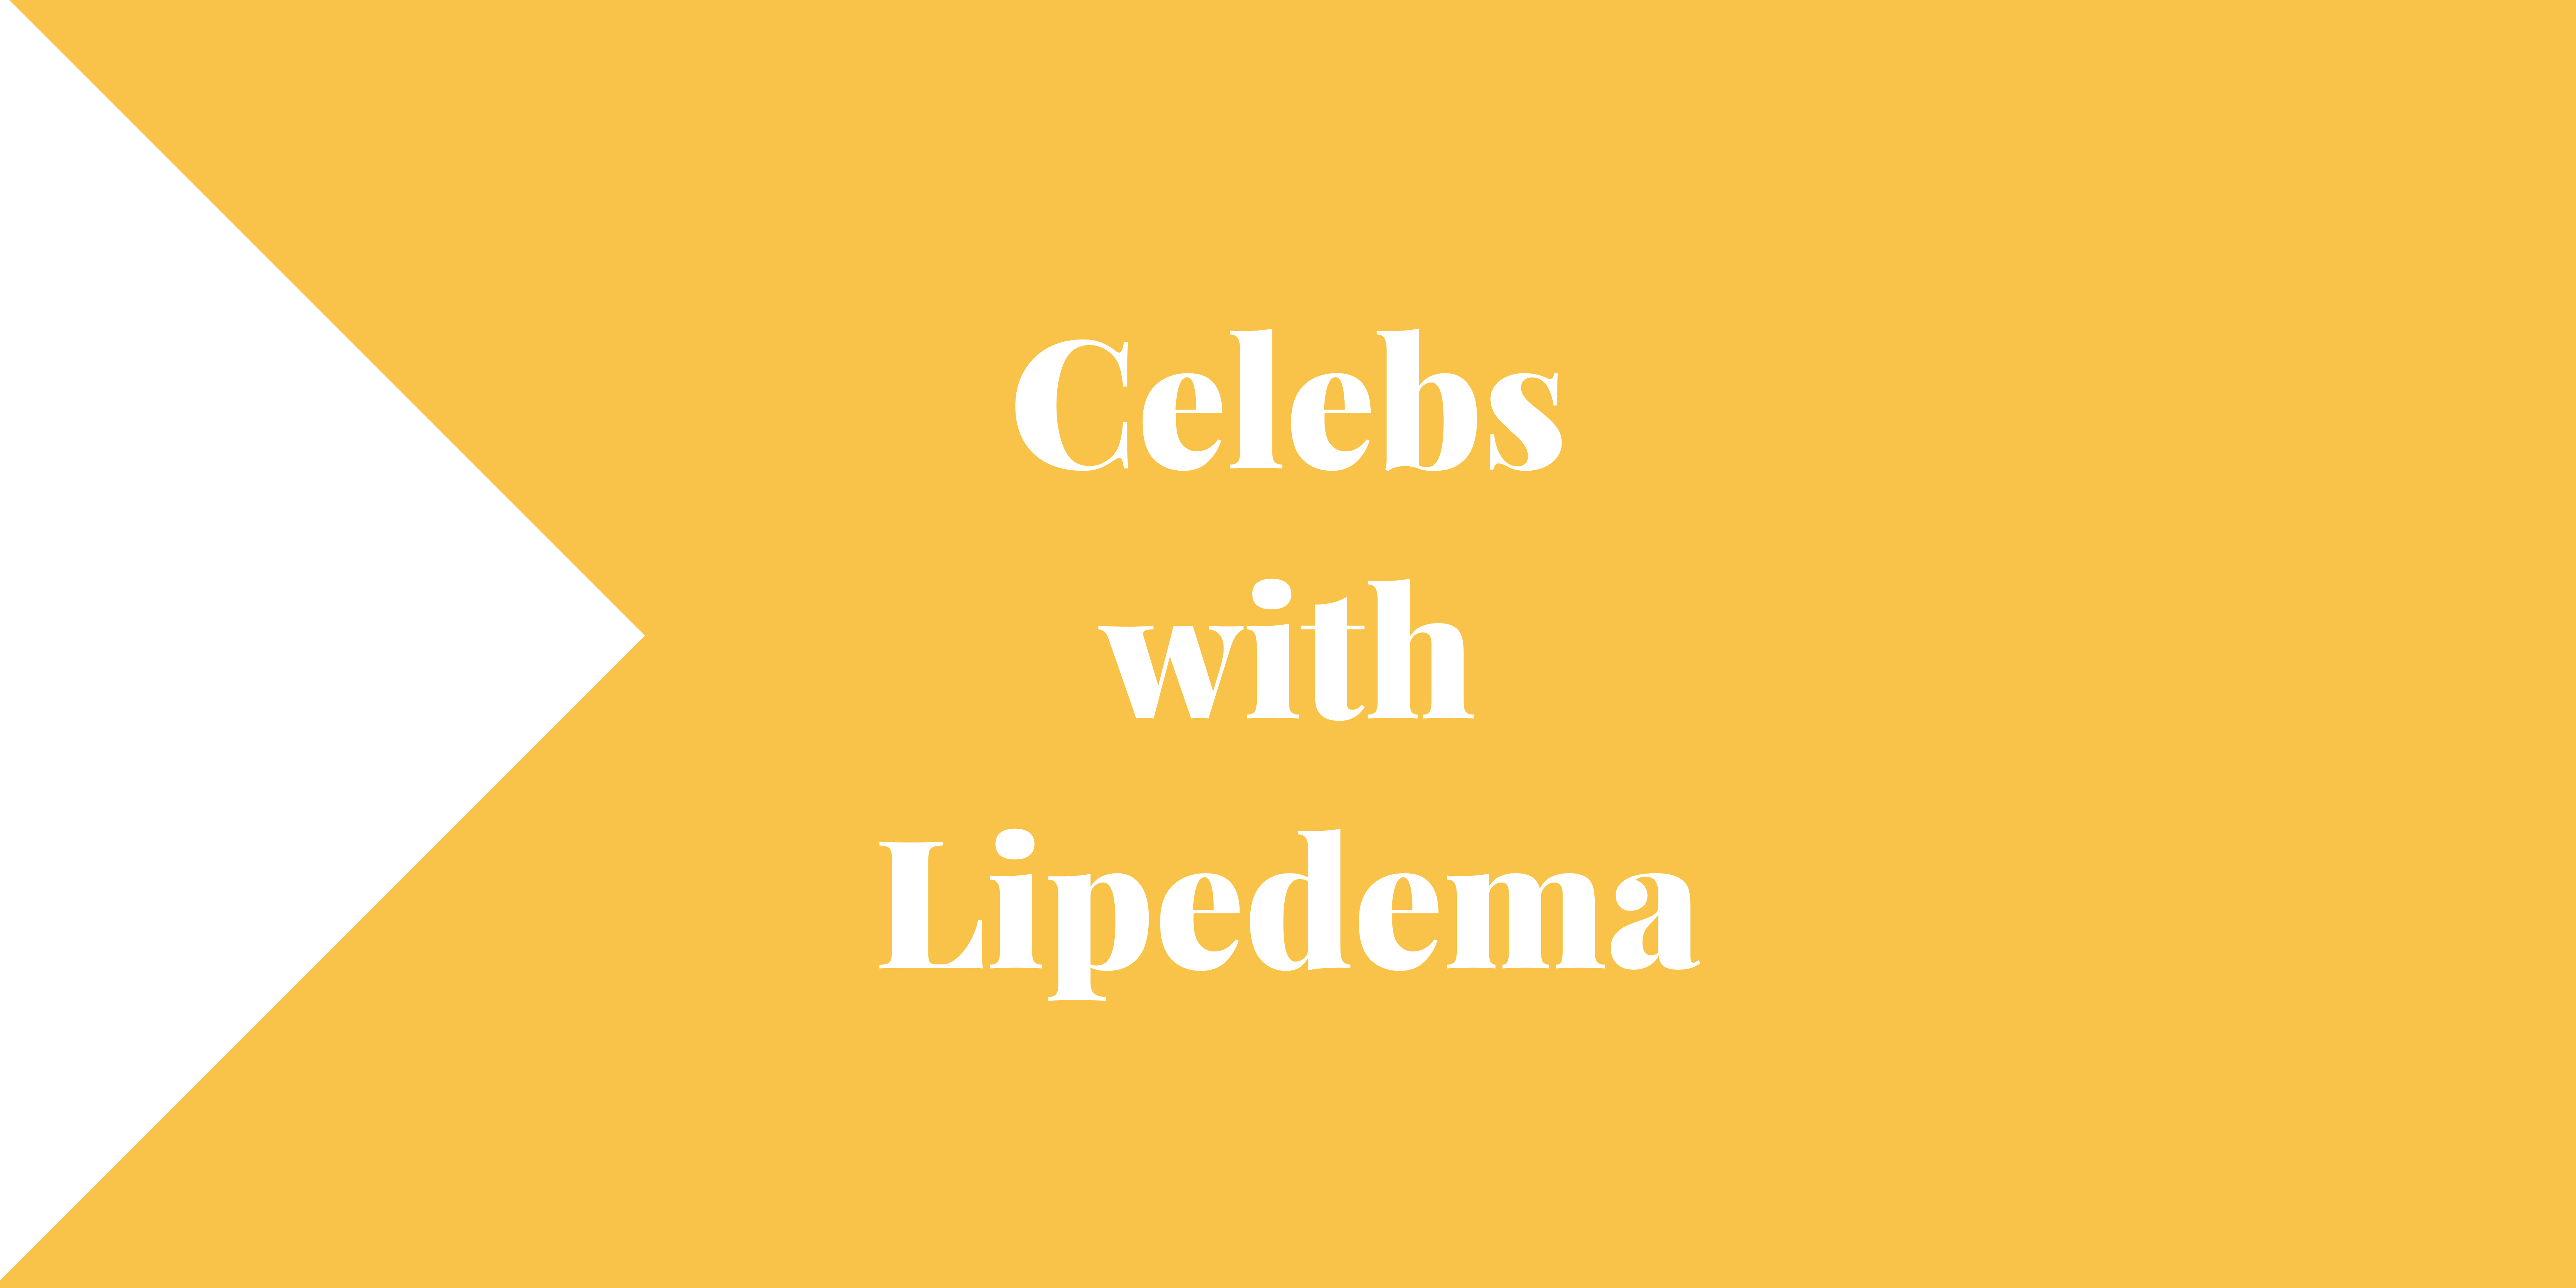 Celebrities With Lipedema